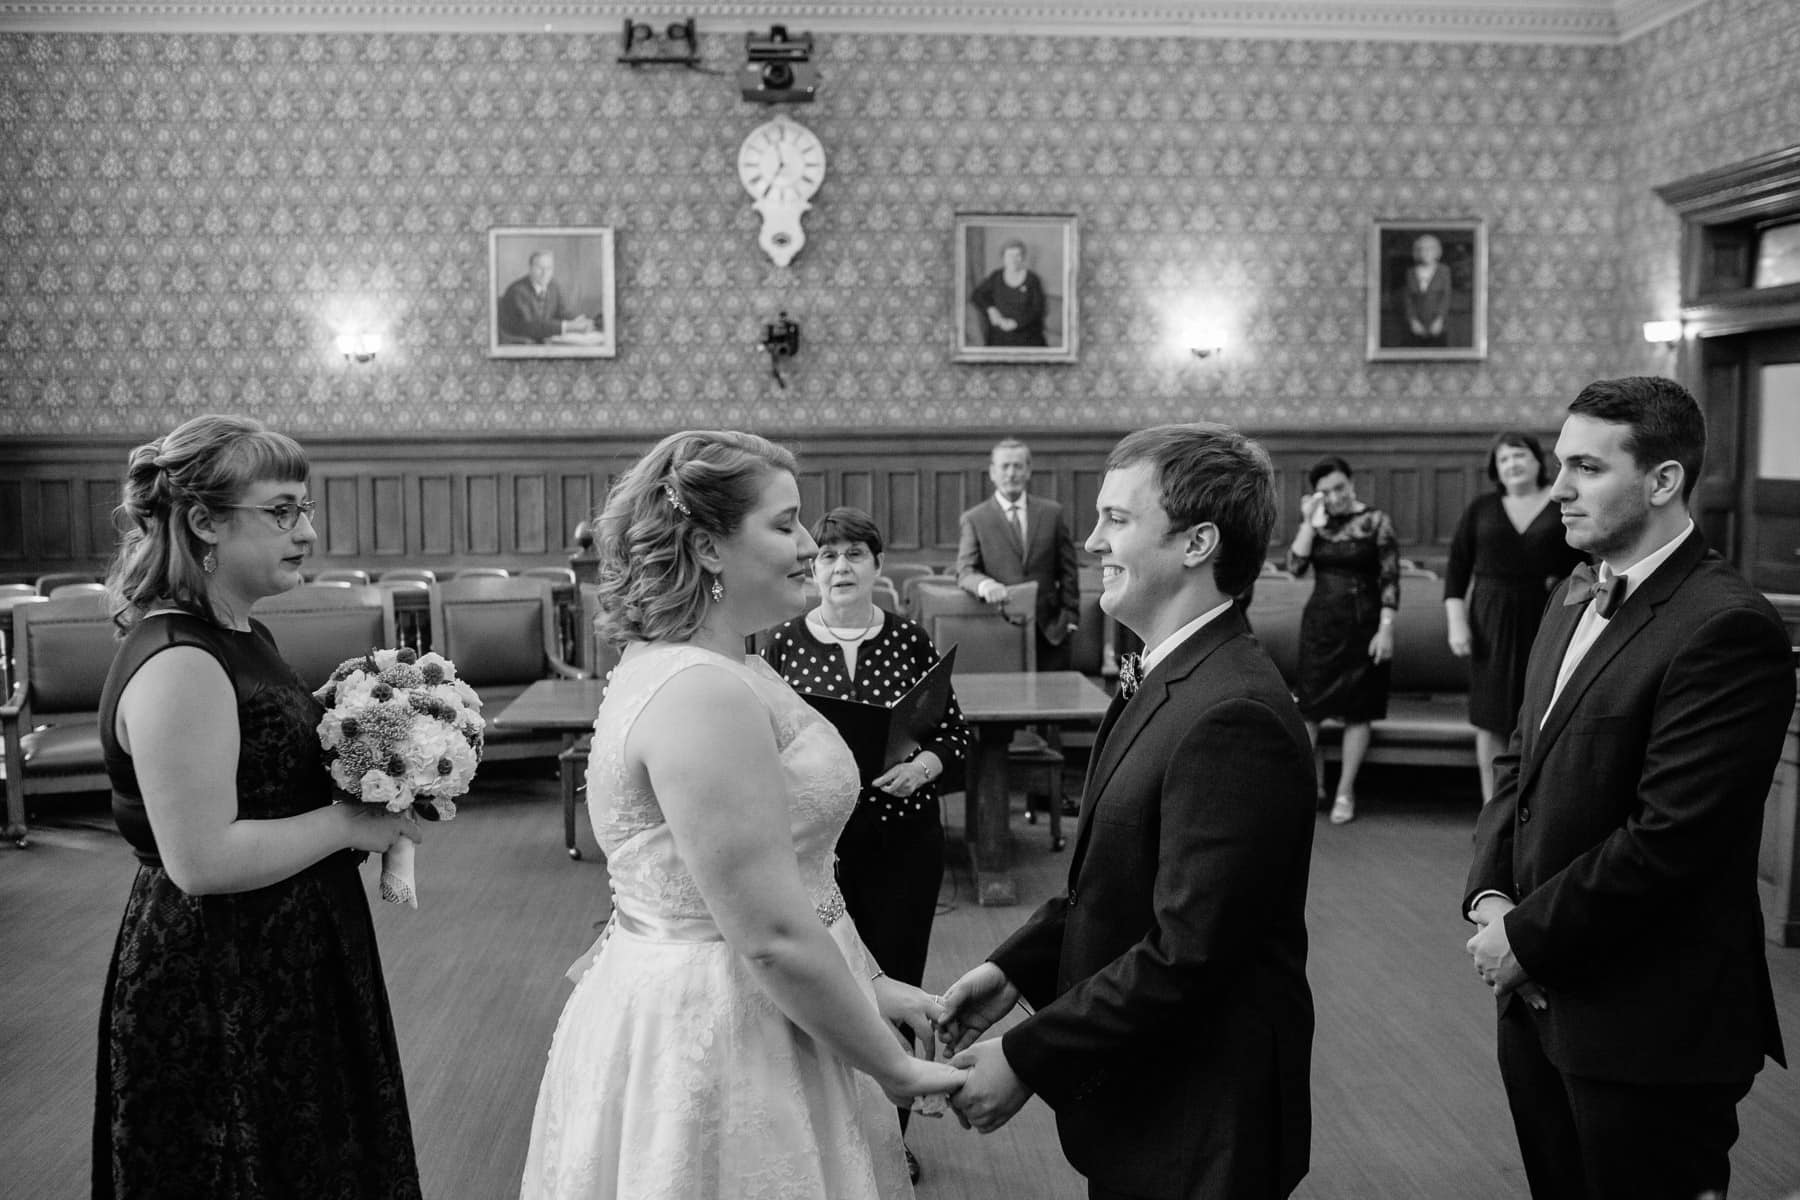 Documentary wedding photography at Cambridge City Hall.